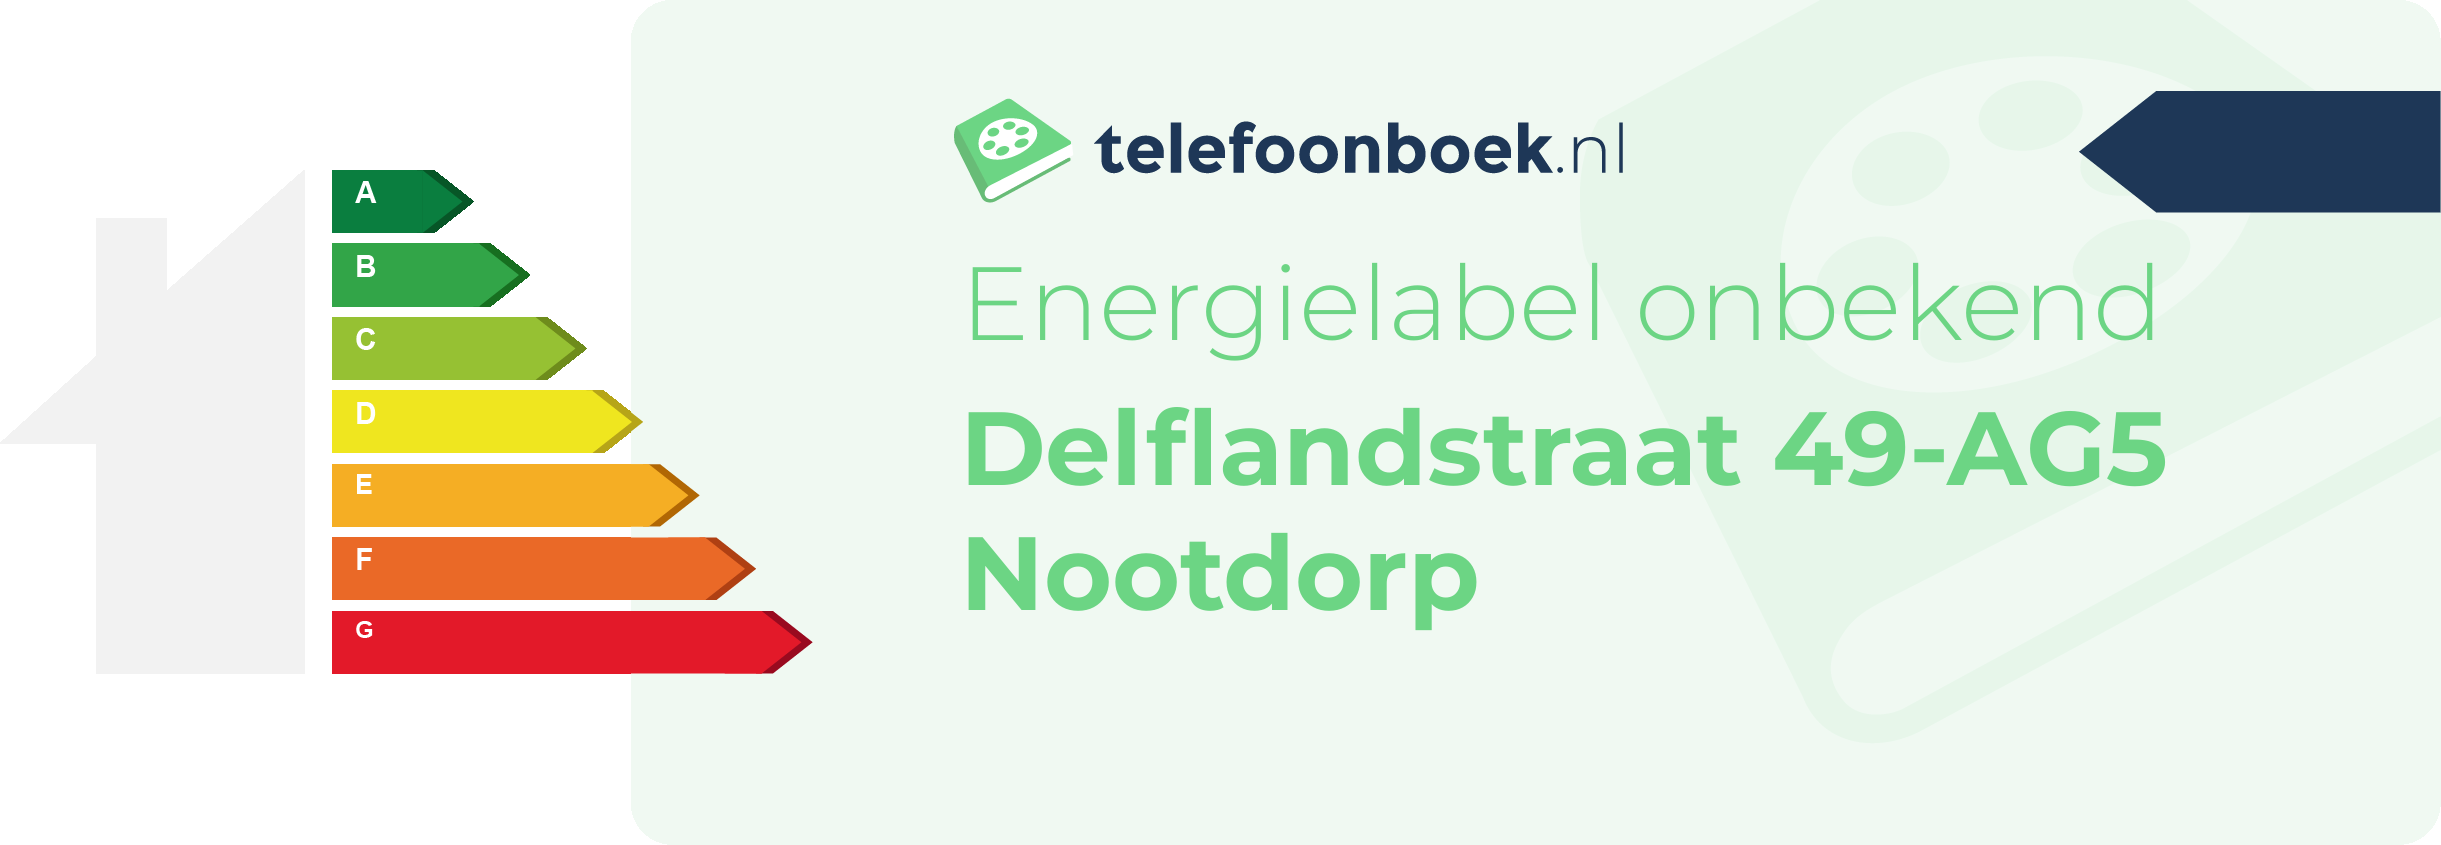 Energielabel Delflandstraat 49-AG5 Nootdorp